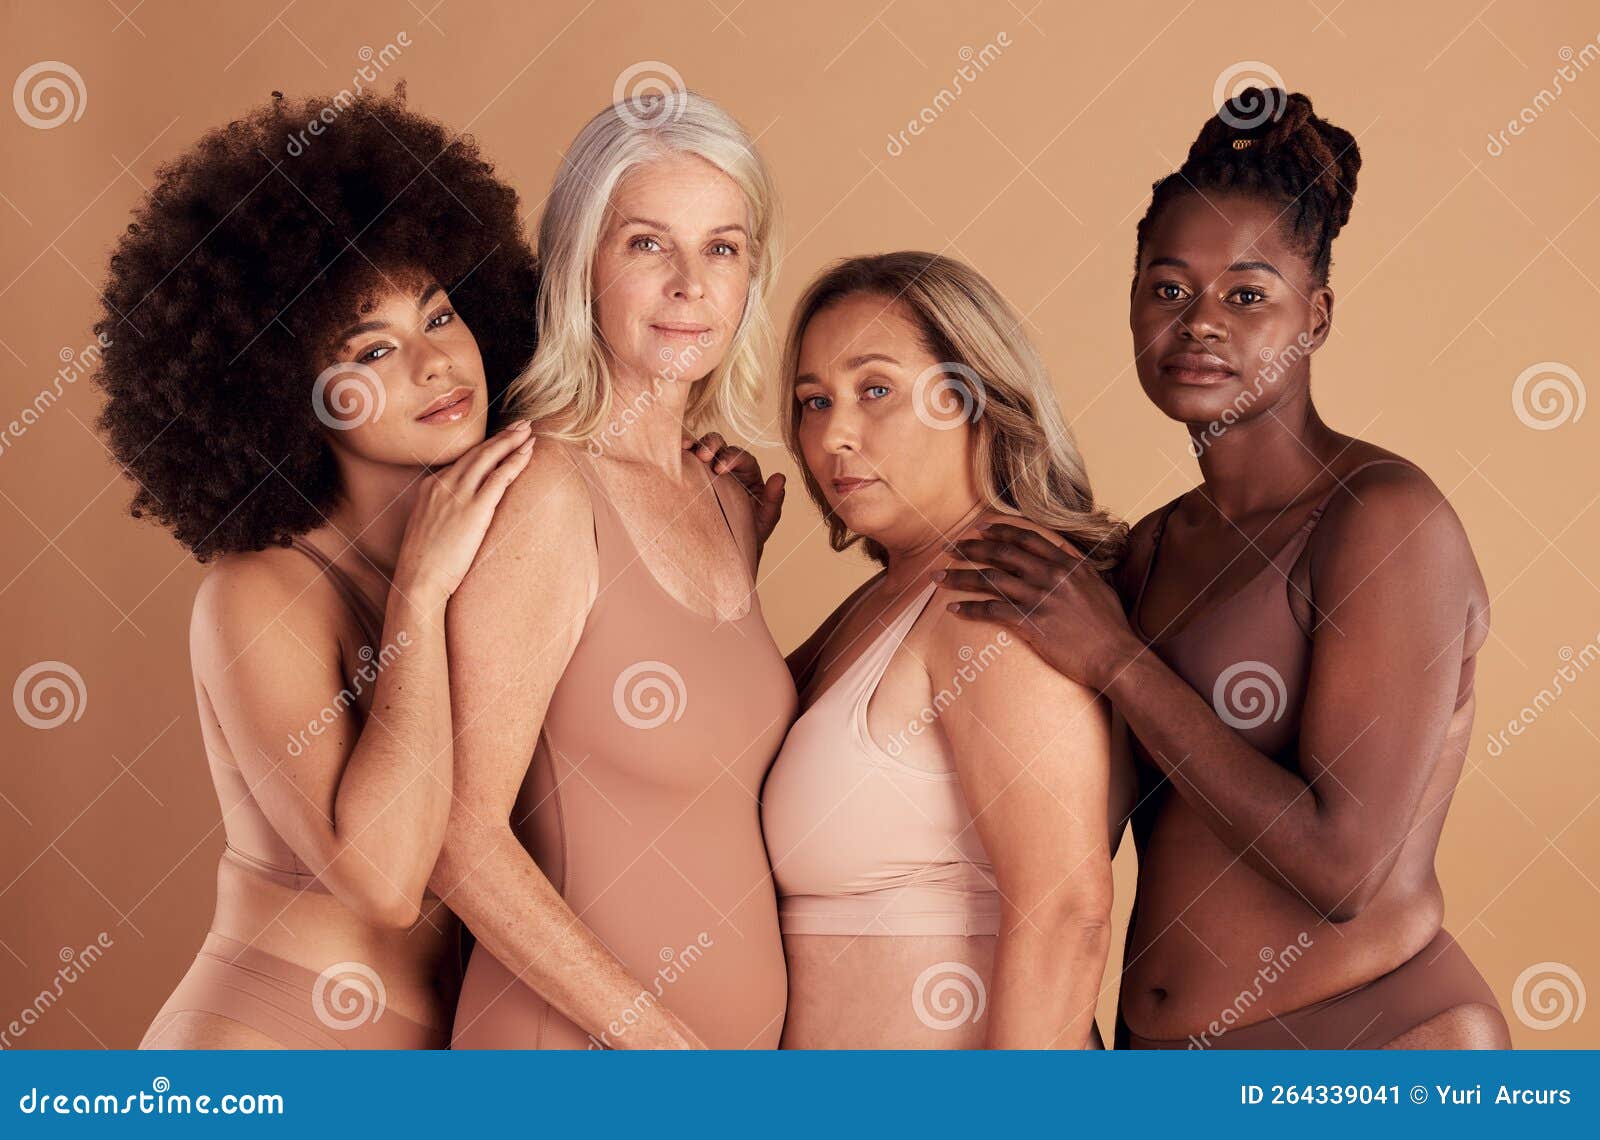 Group of Women Wearing Underwear · Free Stock Photo